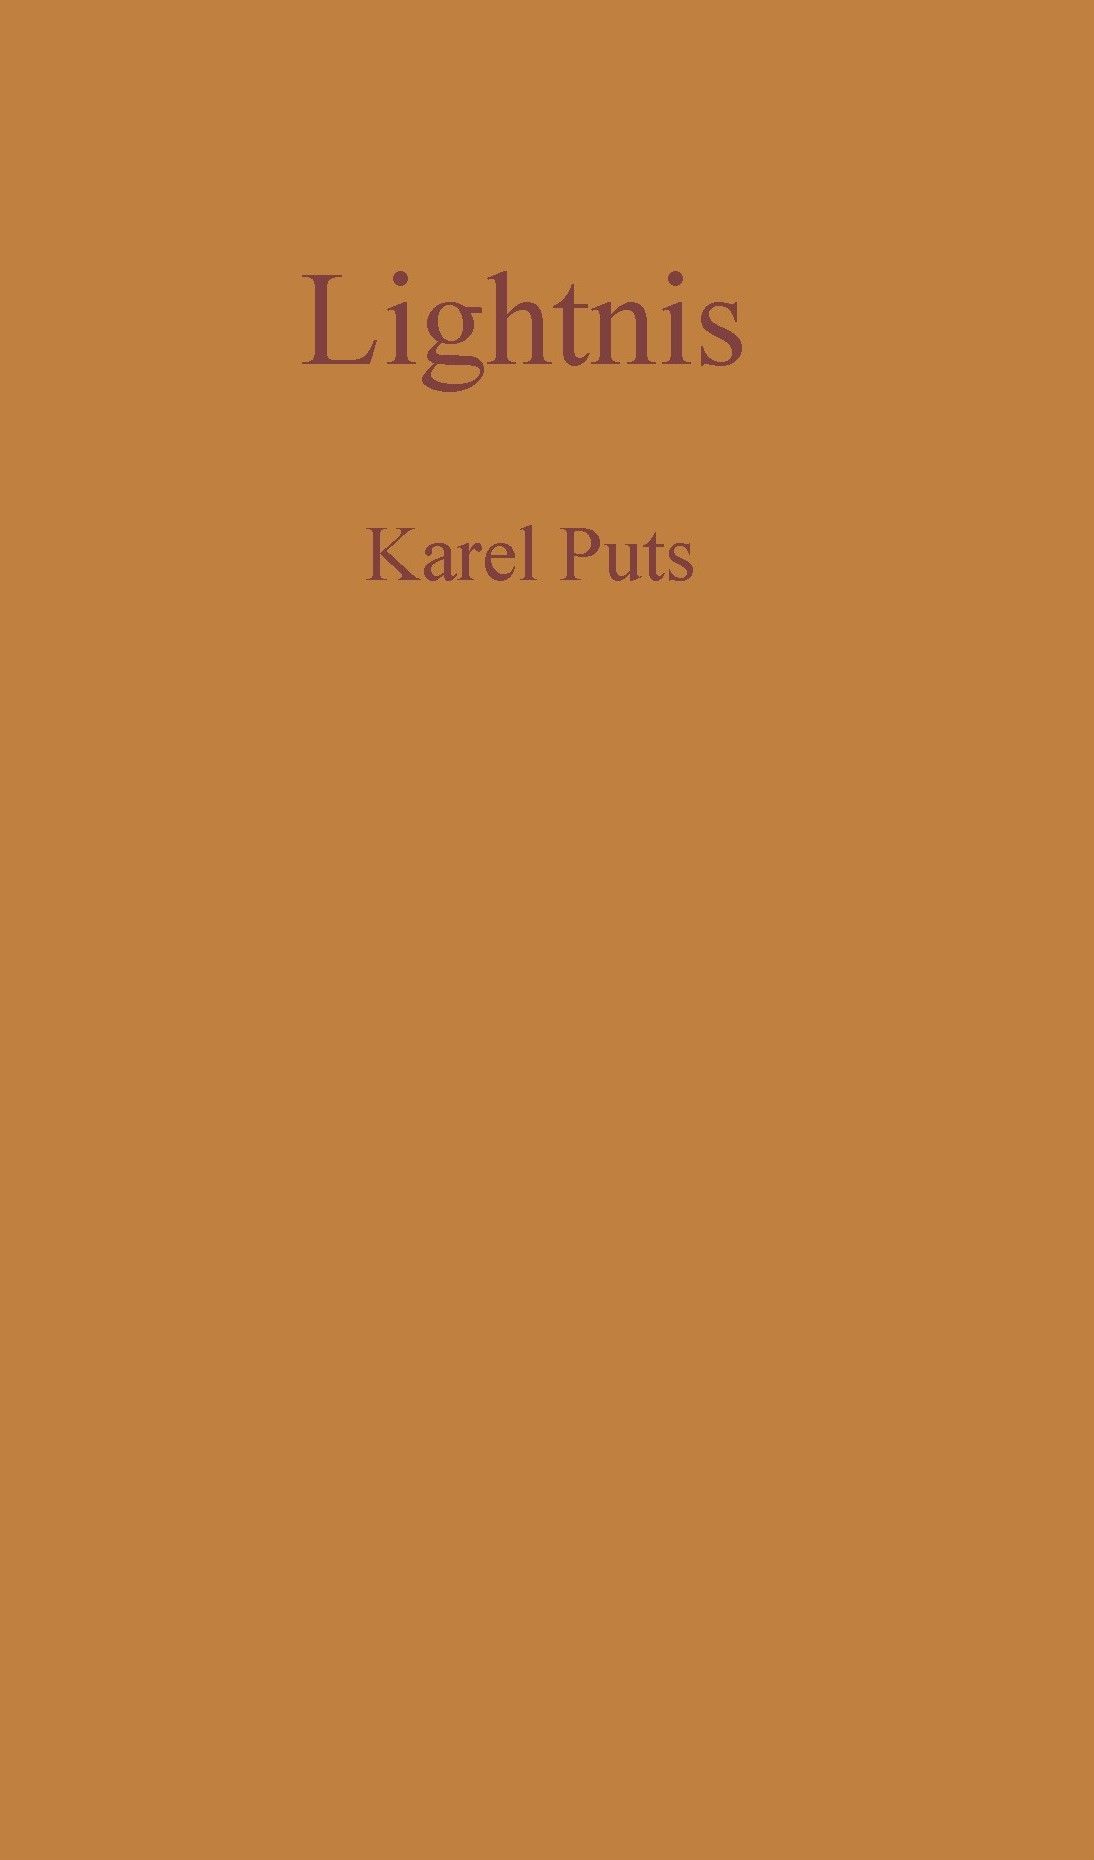 Boek Lightnis, Karel Puts, literatuur, fictie;